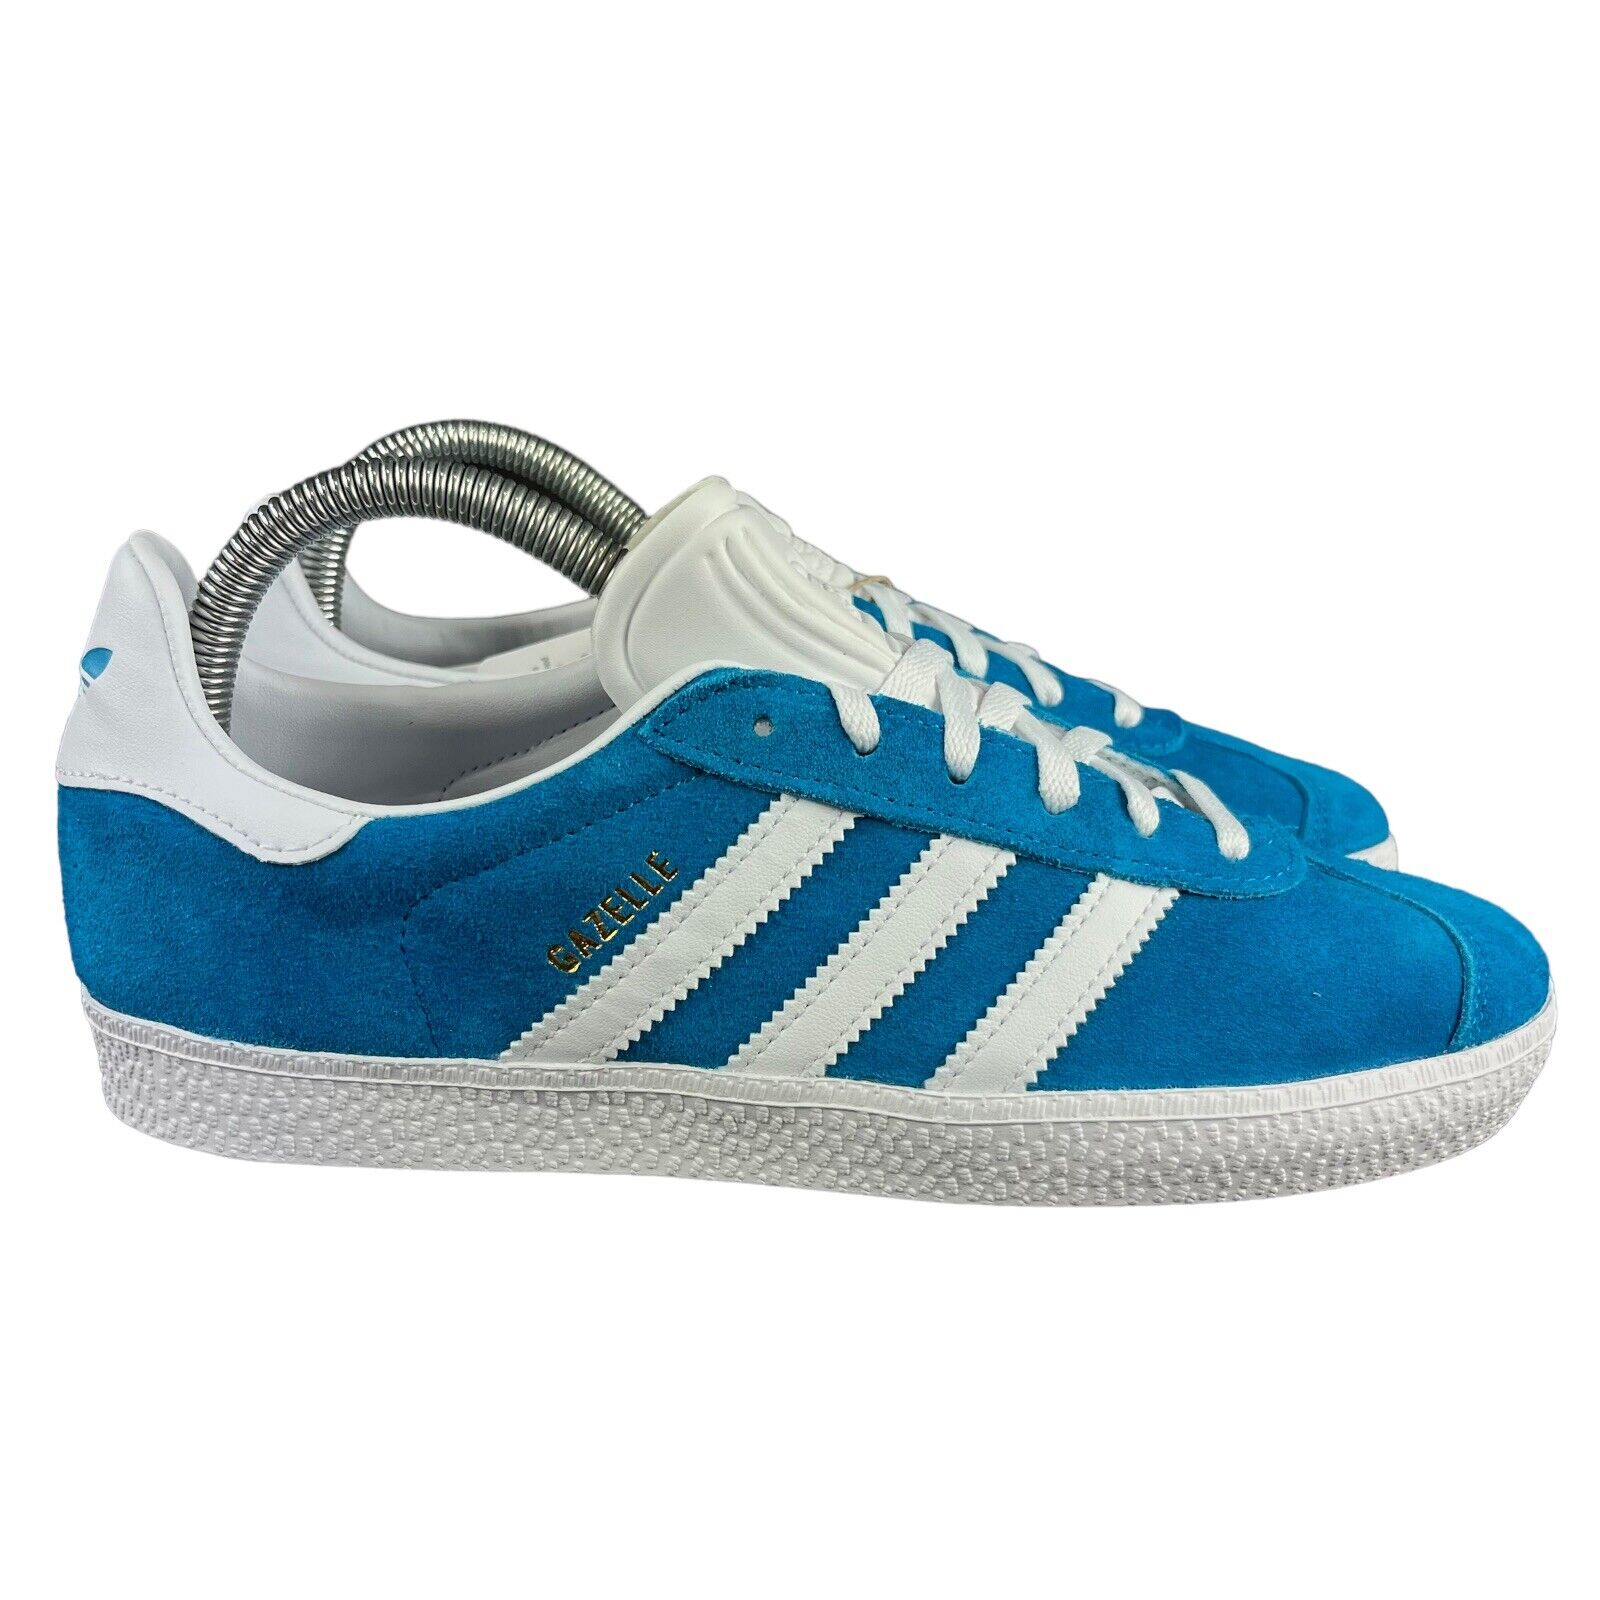 Adidas Originals Gazelle J Blue White Suede Shoes HP2880 Youth Sz 3.5-7 | eBay